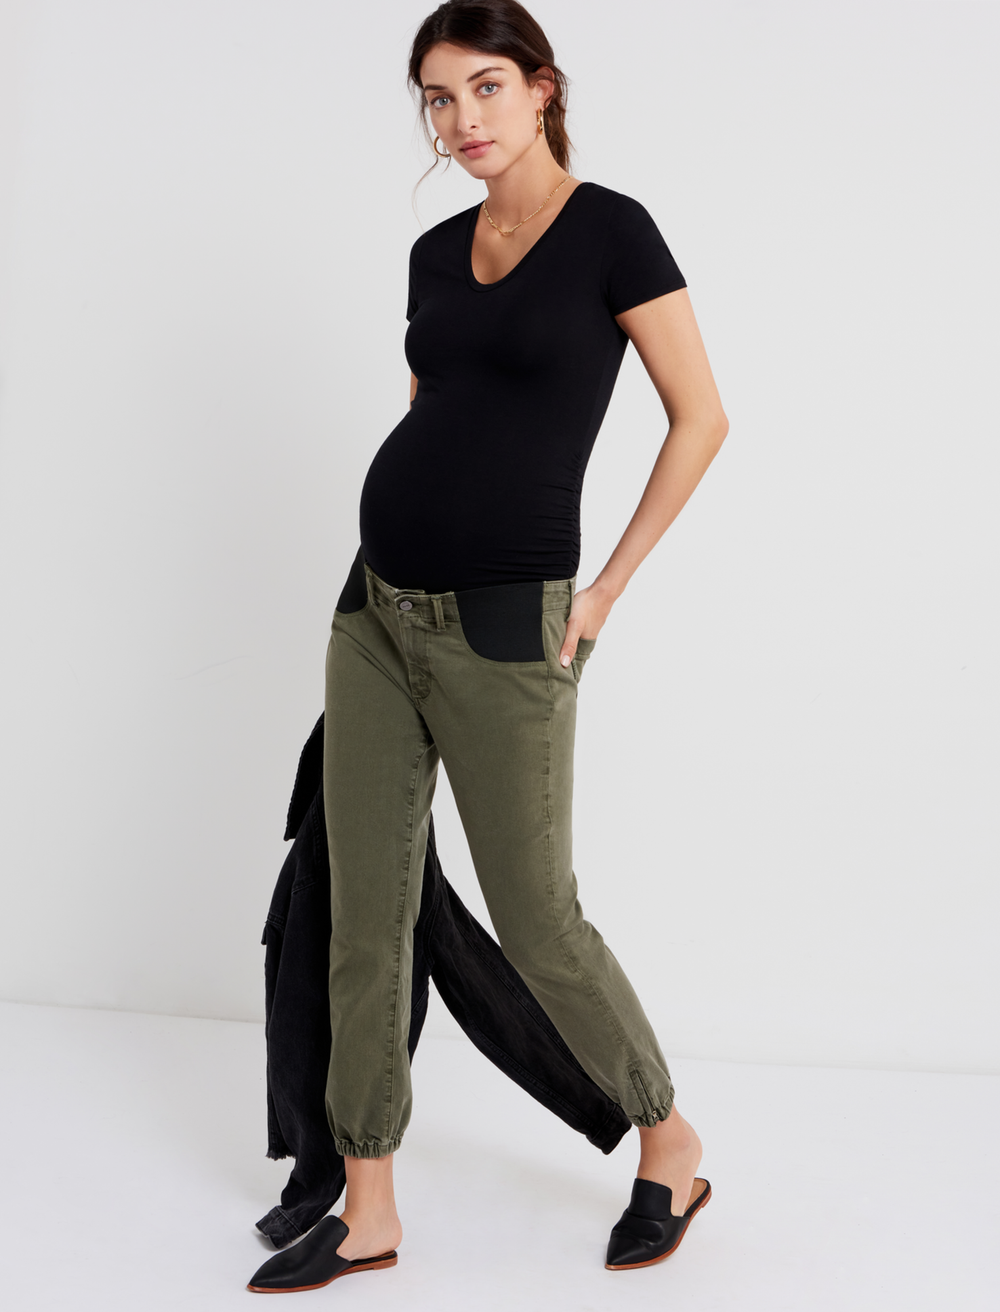 I Really Love My: Jenna Dewan-Tatum's Fave Maternity Jeans